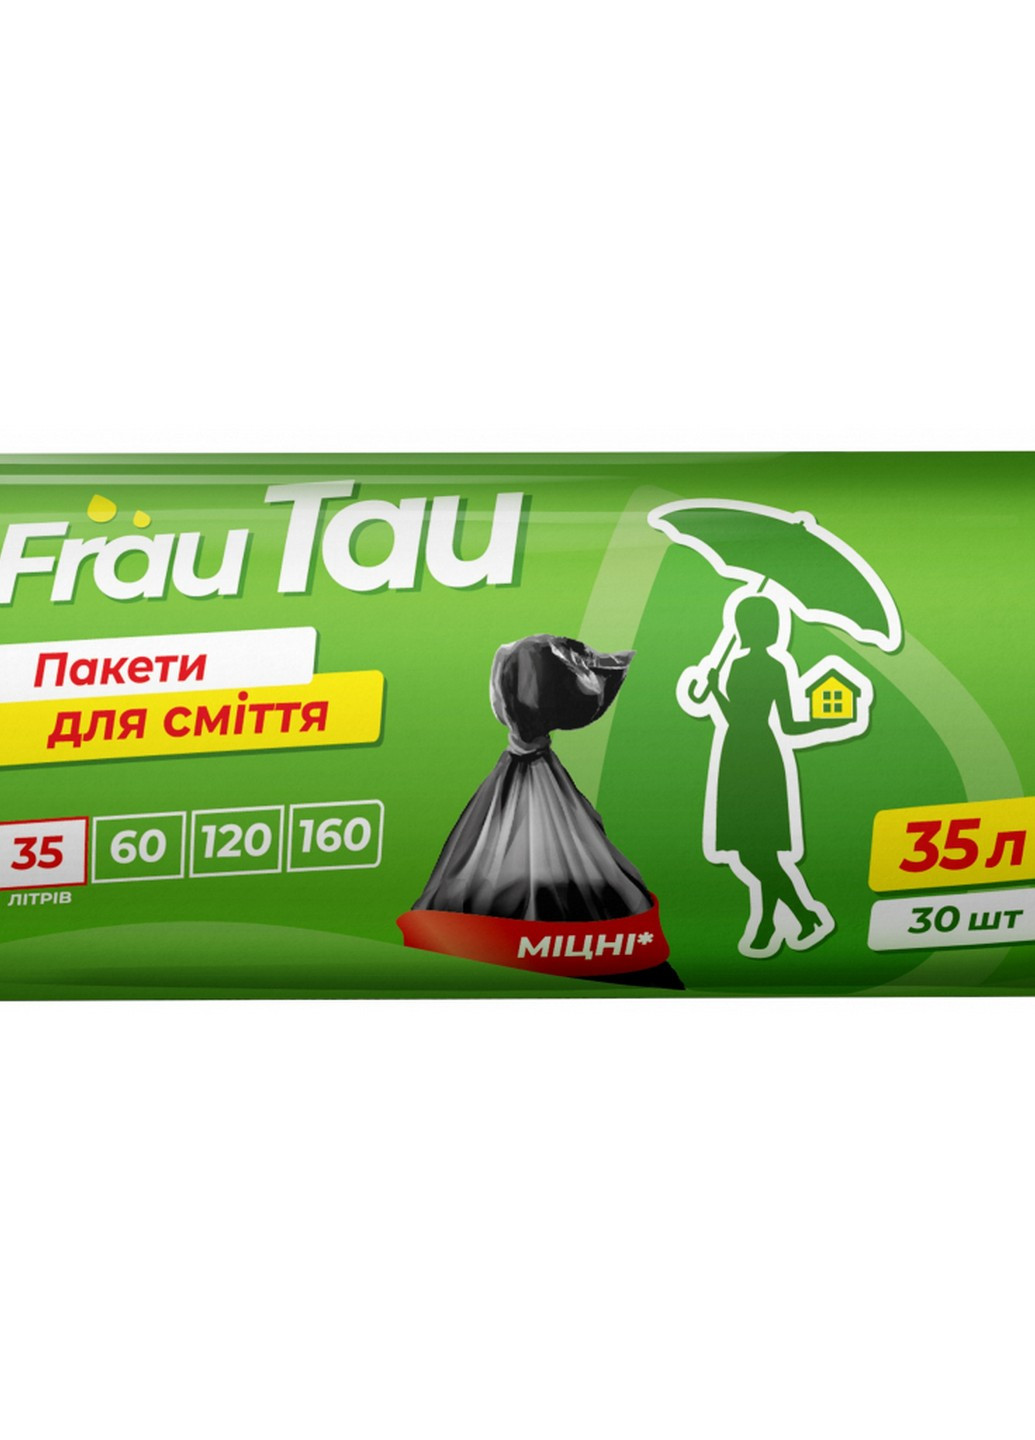 Пакети для сміття, 35л/30 шт Frau Tau (264668799)